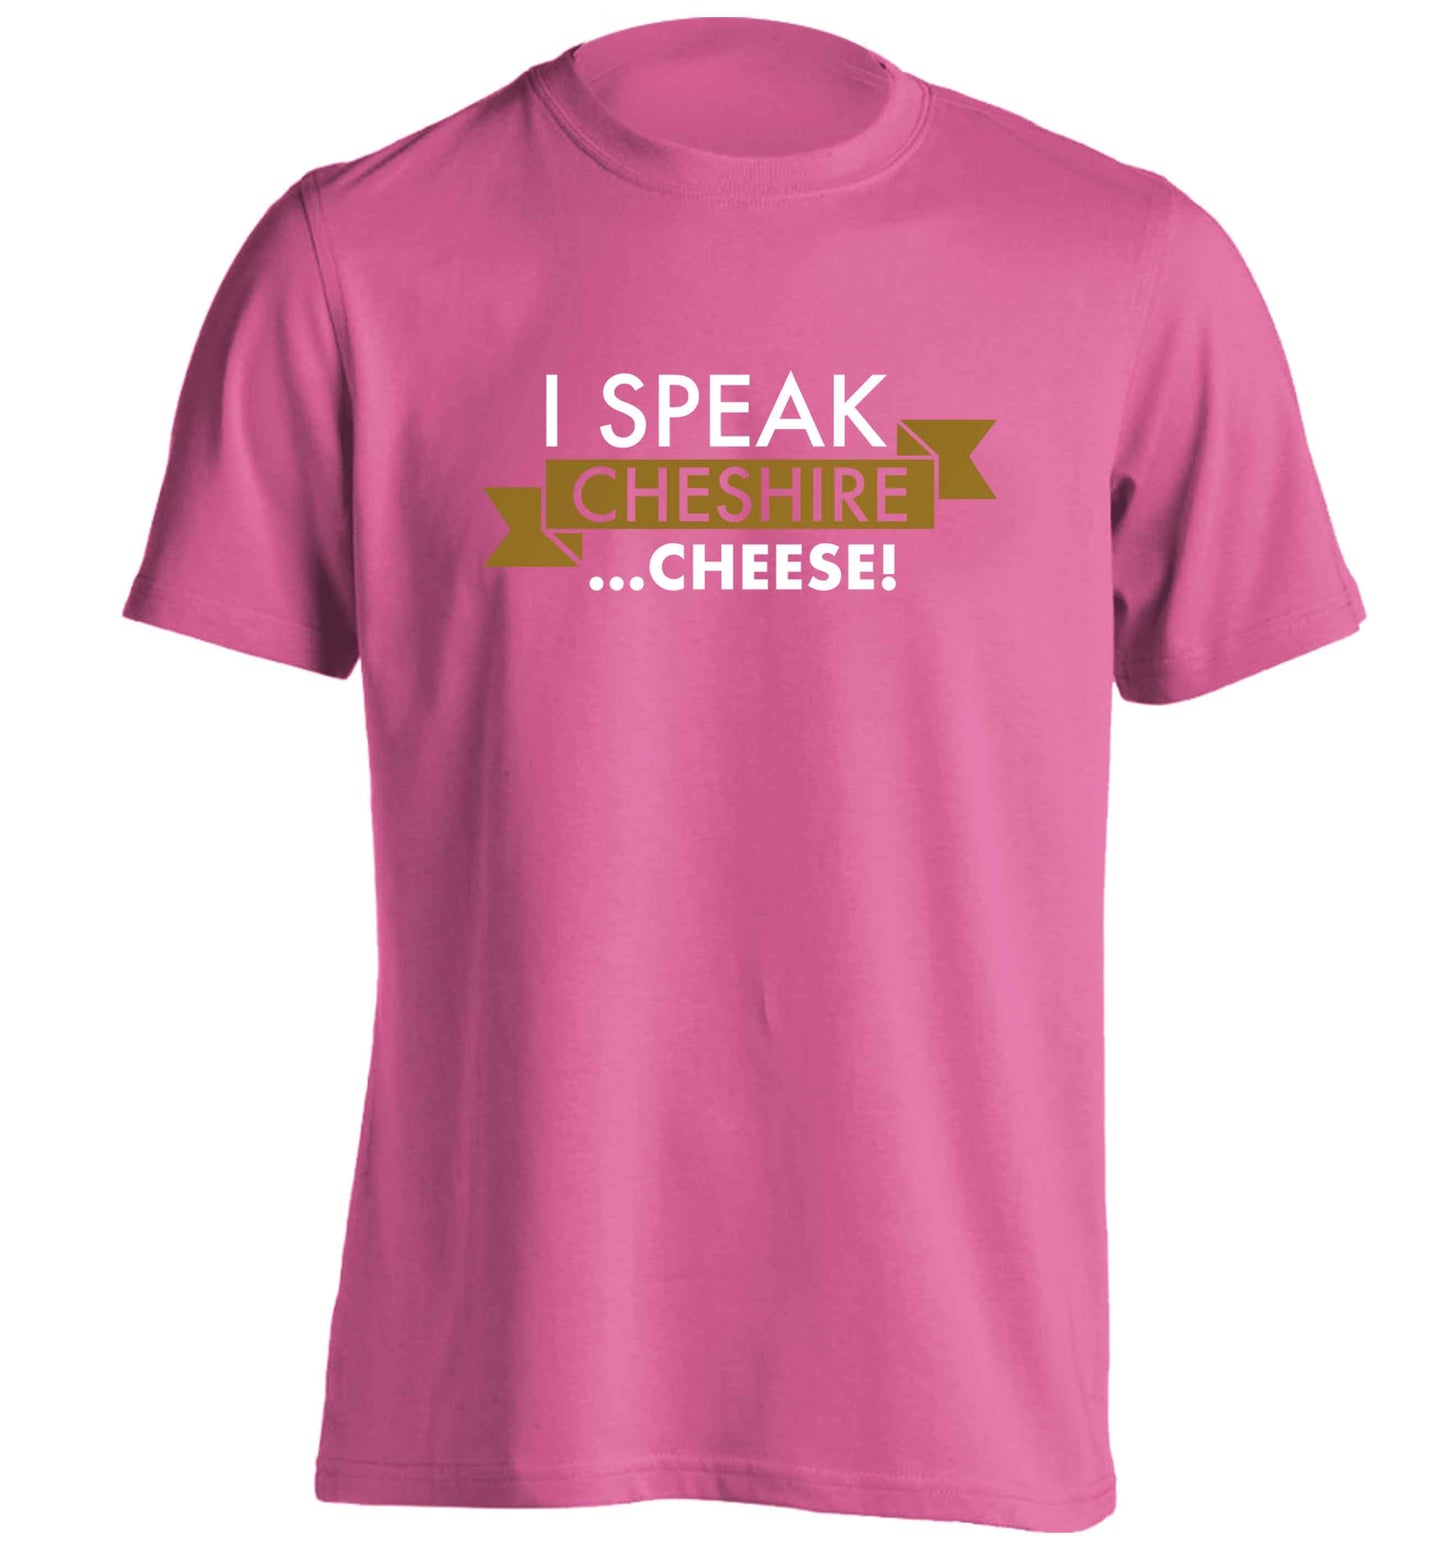 I speak Cheshire cheese adults unisex pink Tshirt 2XL